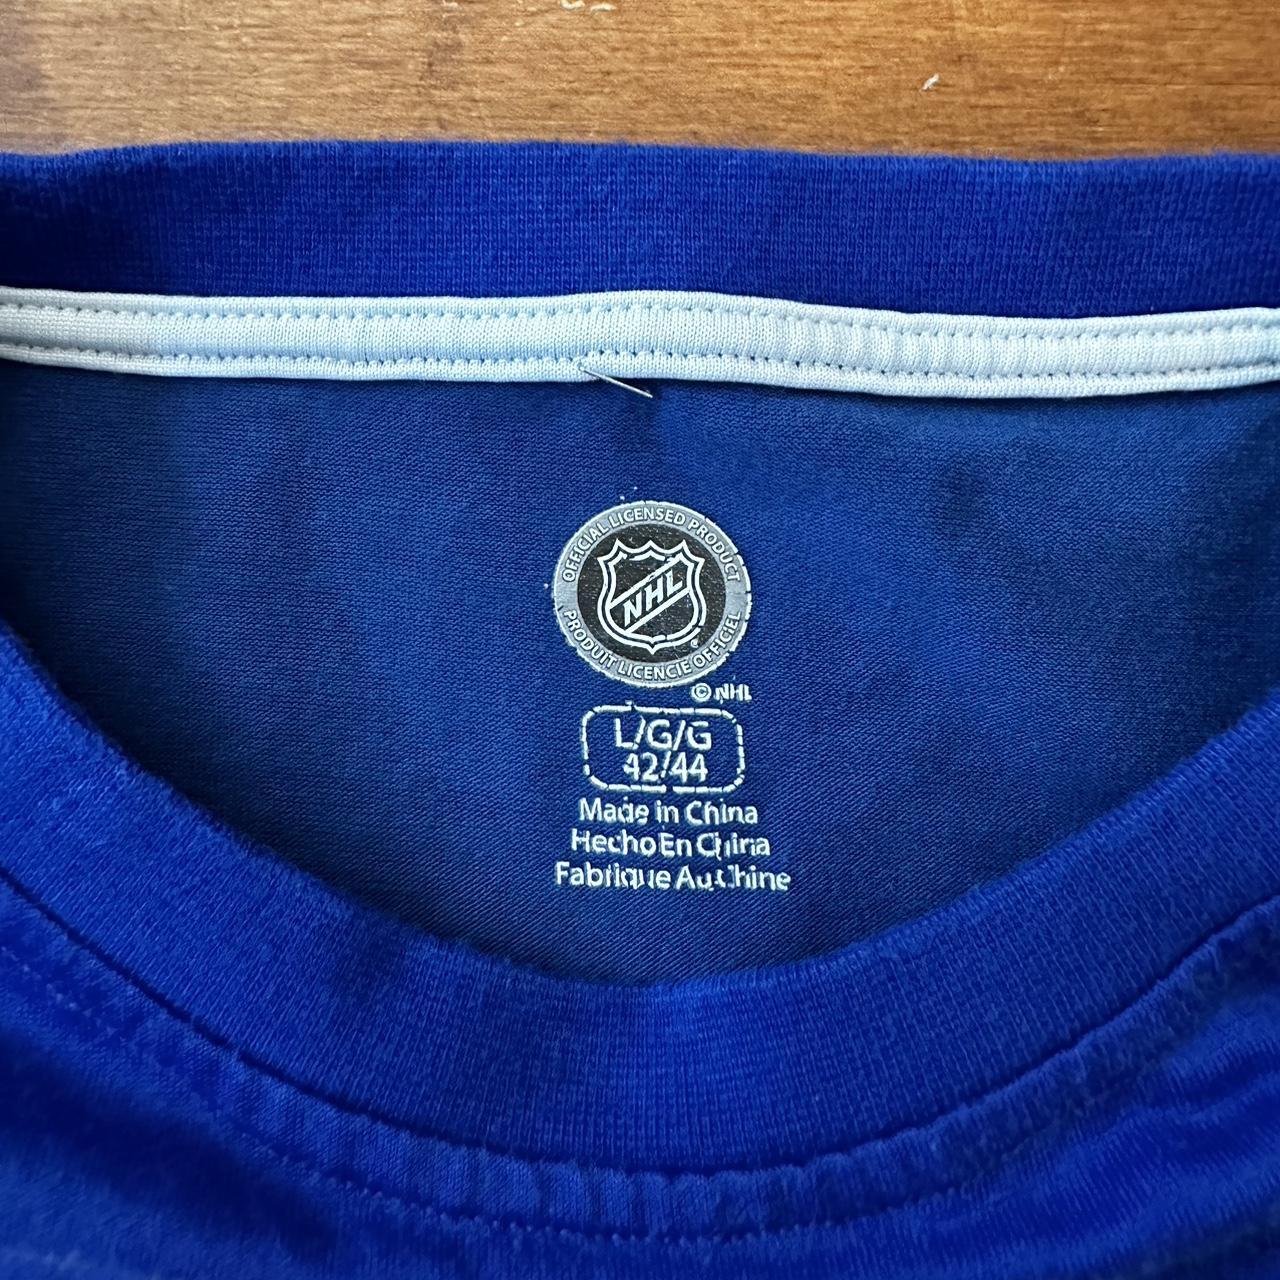 NHL Men's T-Shirt - Blue - L